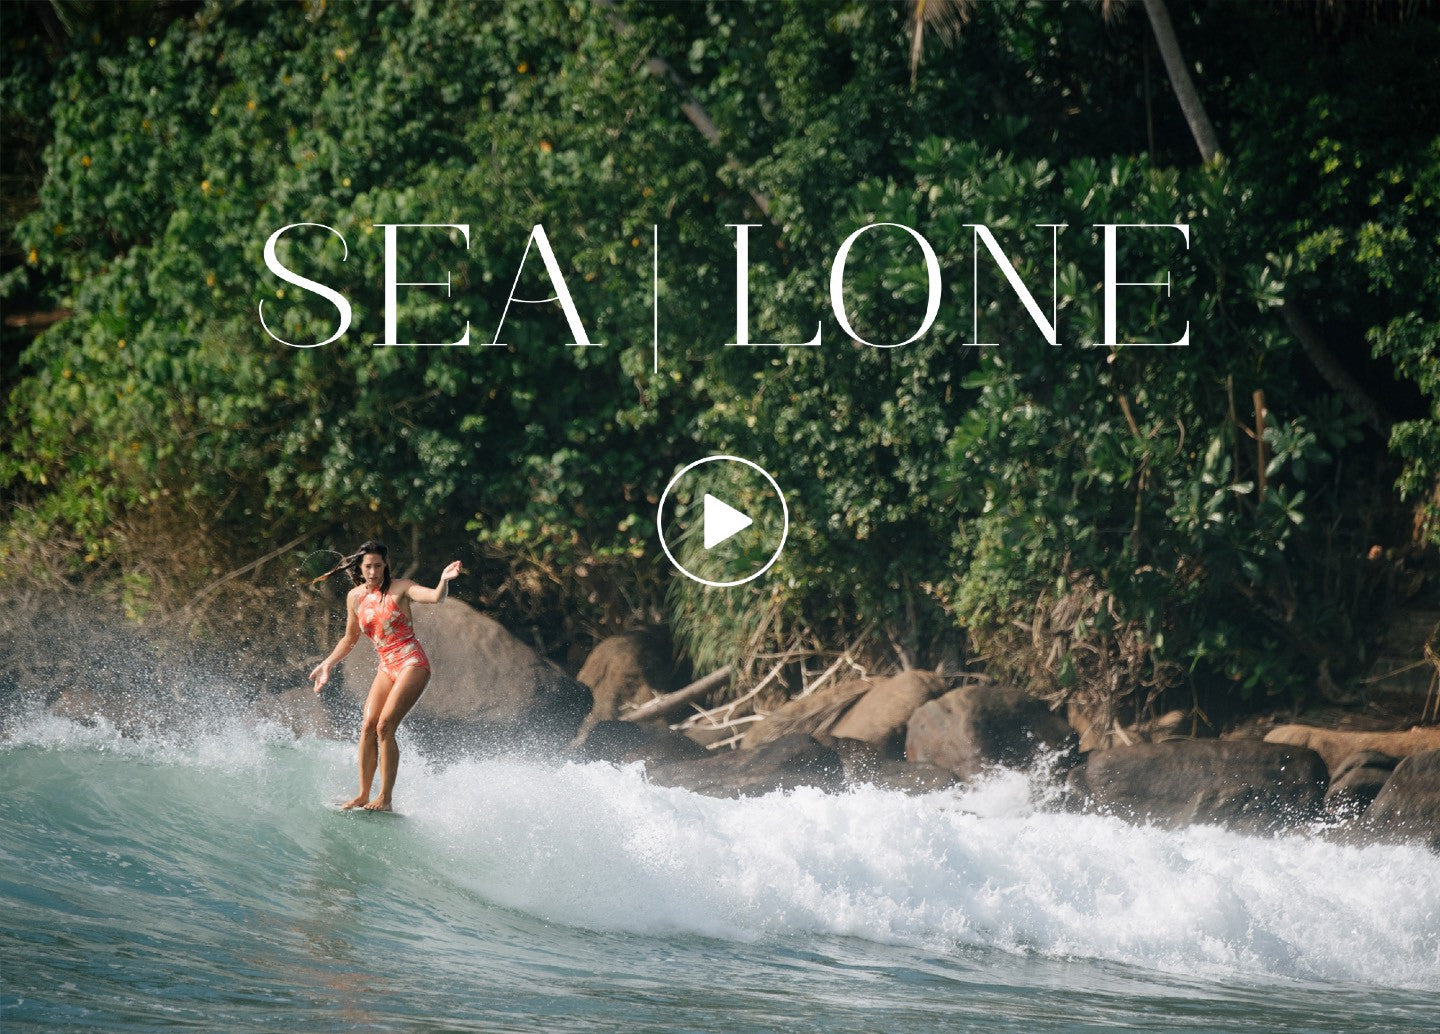 Sea Lone - Full Film